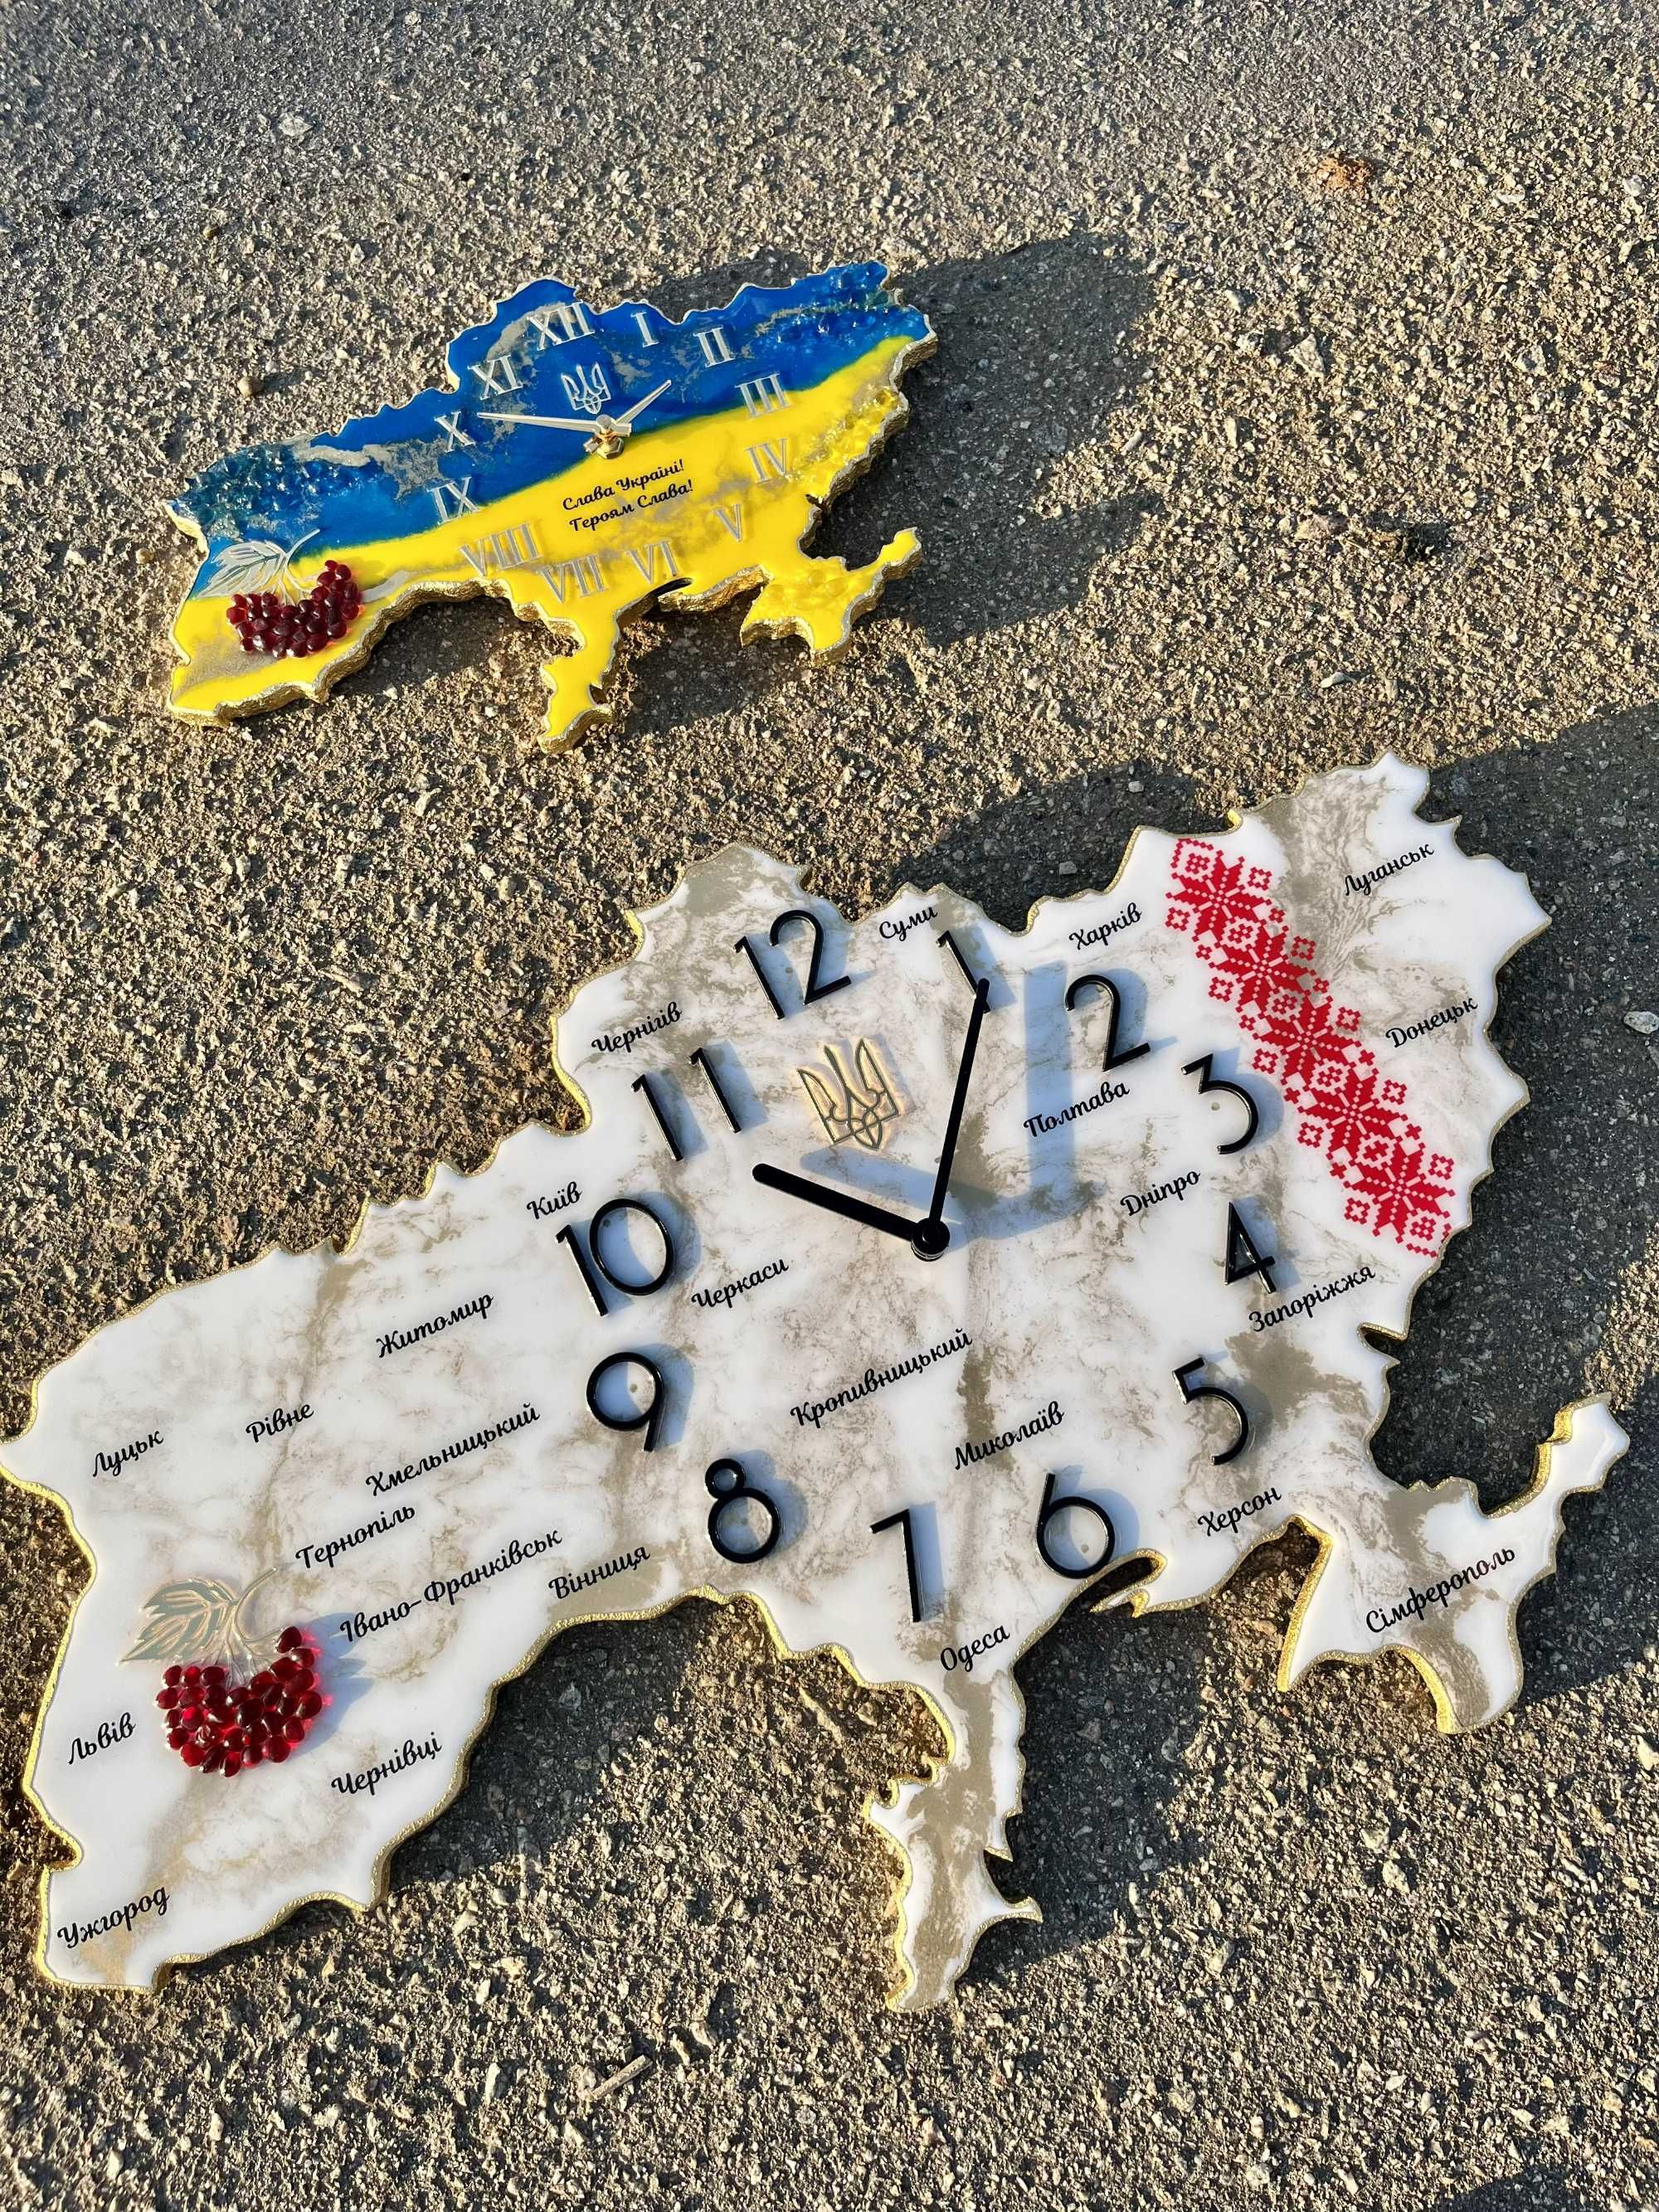 Годинник Мапа України у наявності на подарунок!ЗСУ,Директору,колегам